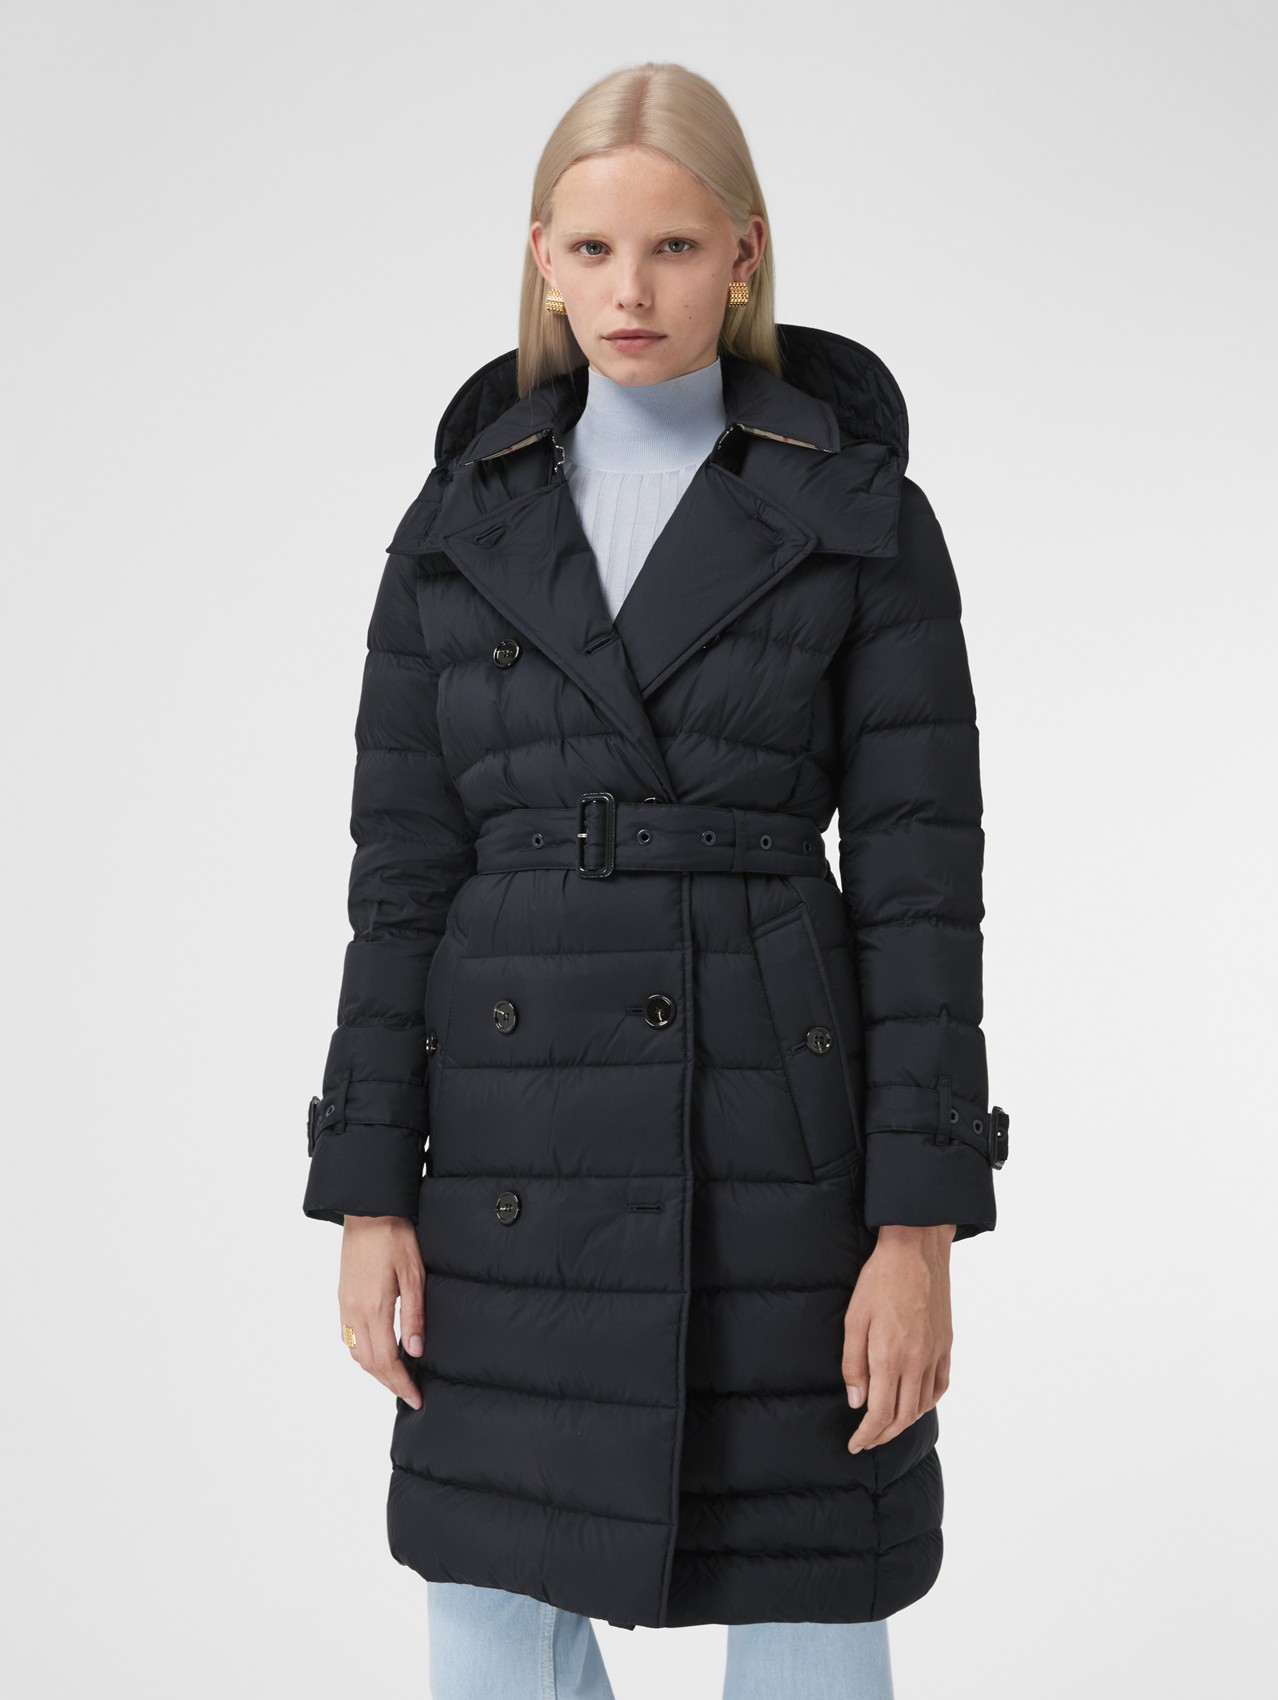 Abrigo con relleno de plumón y capucha extraíble (Negro Marino)